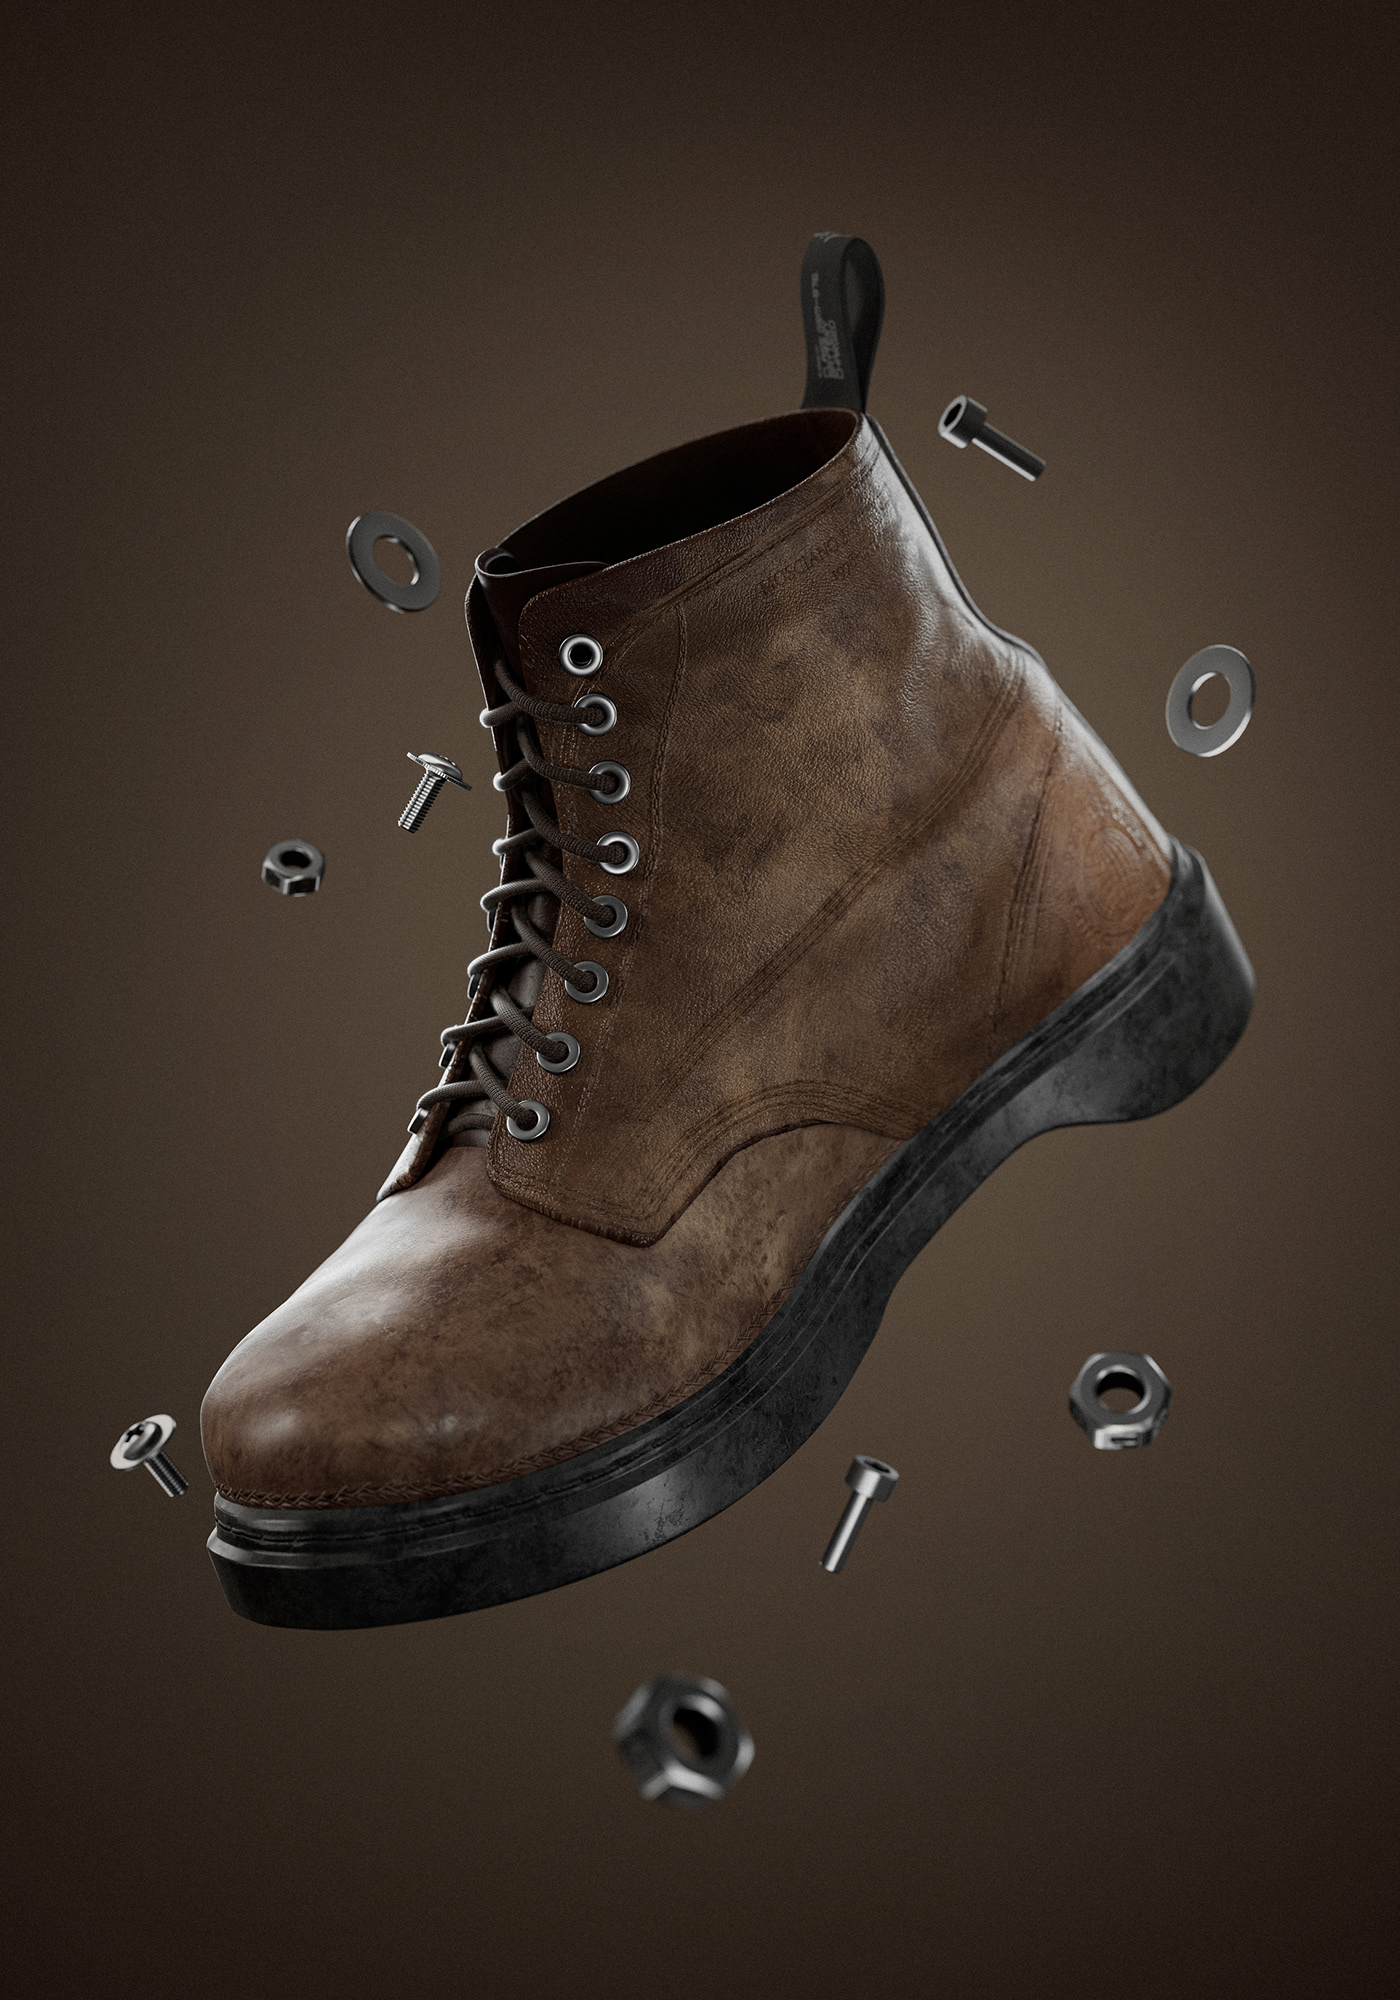 3D CGI cinema 4d Digital Art  industry octane product Render shoes Substance Painter